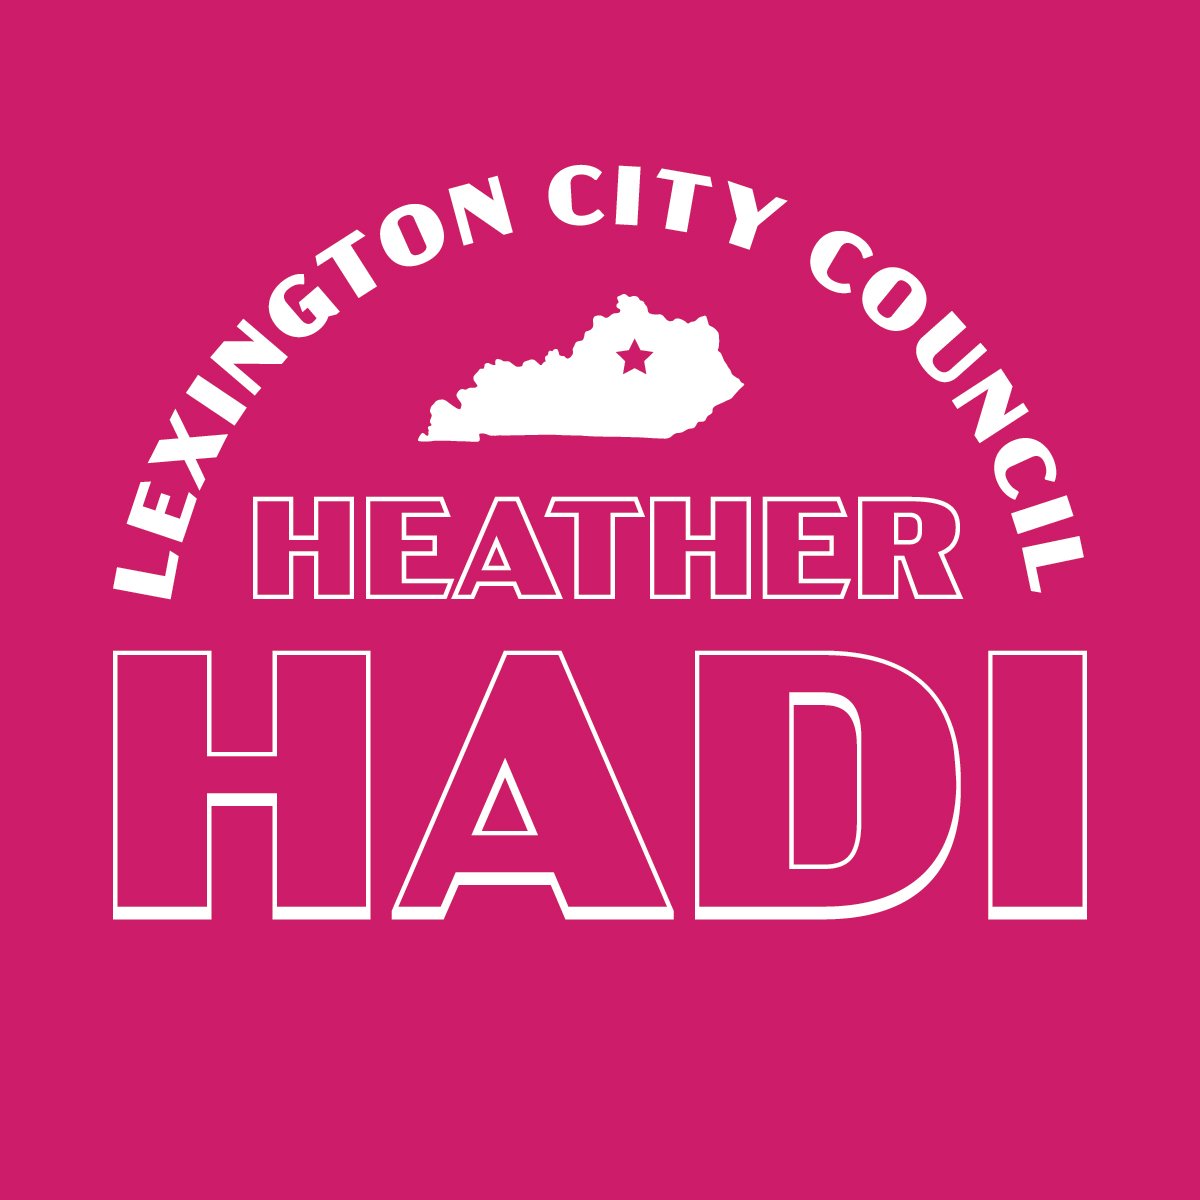 Heather Hadi for Lexington City Council